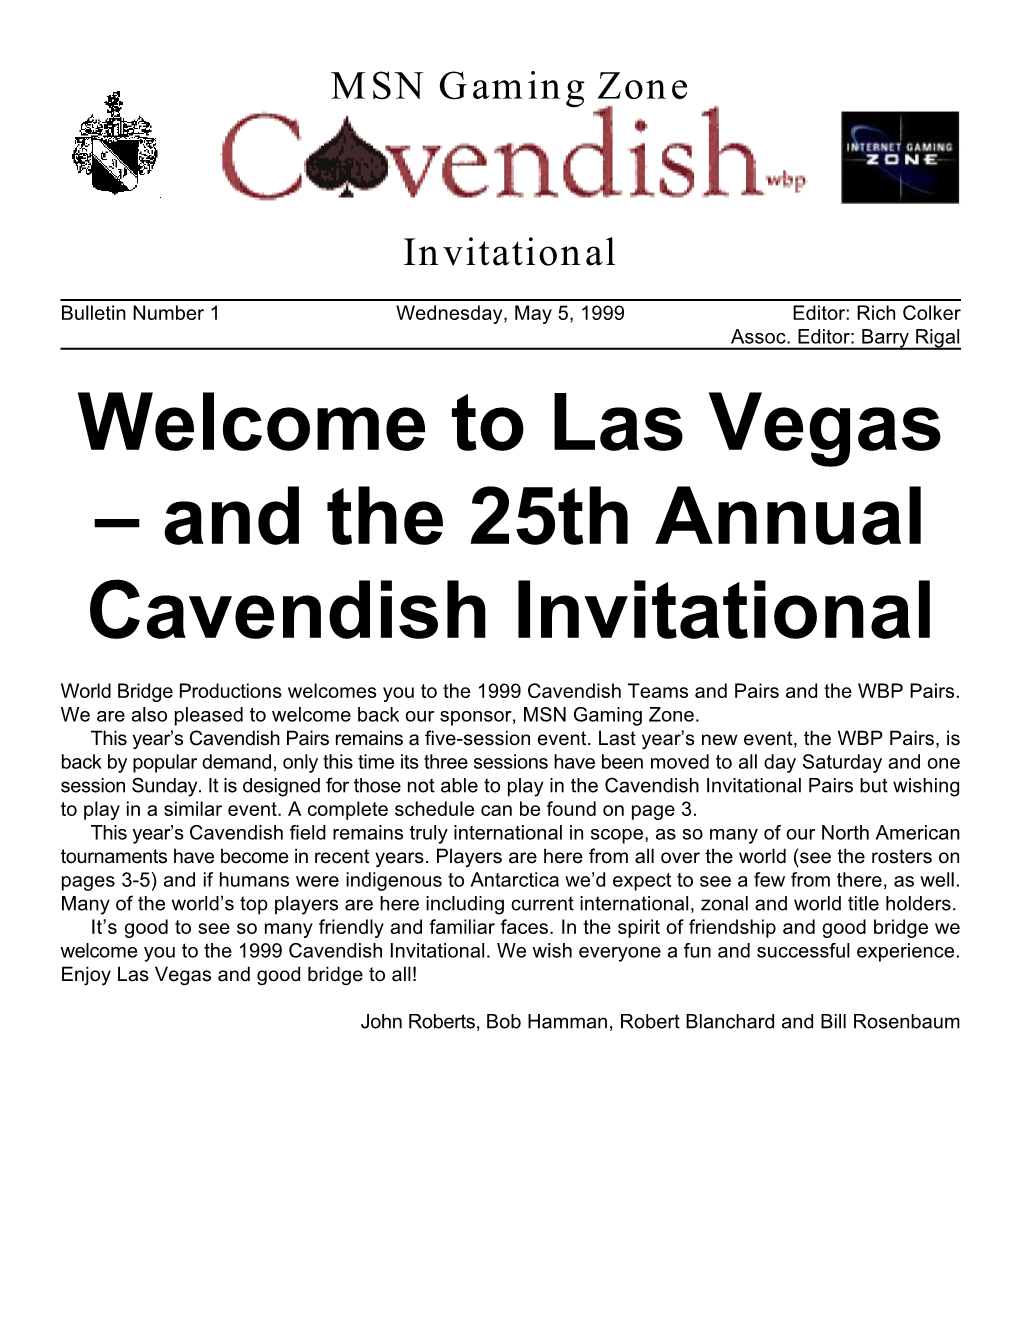 1999 MSN Cavendish Invitational